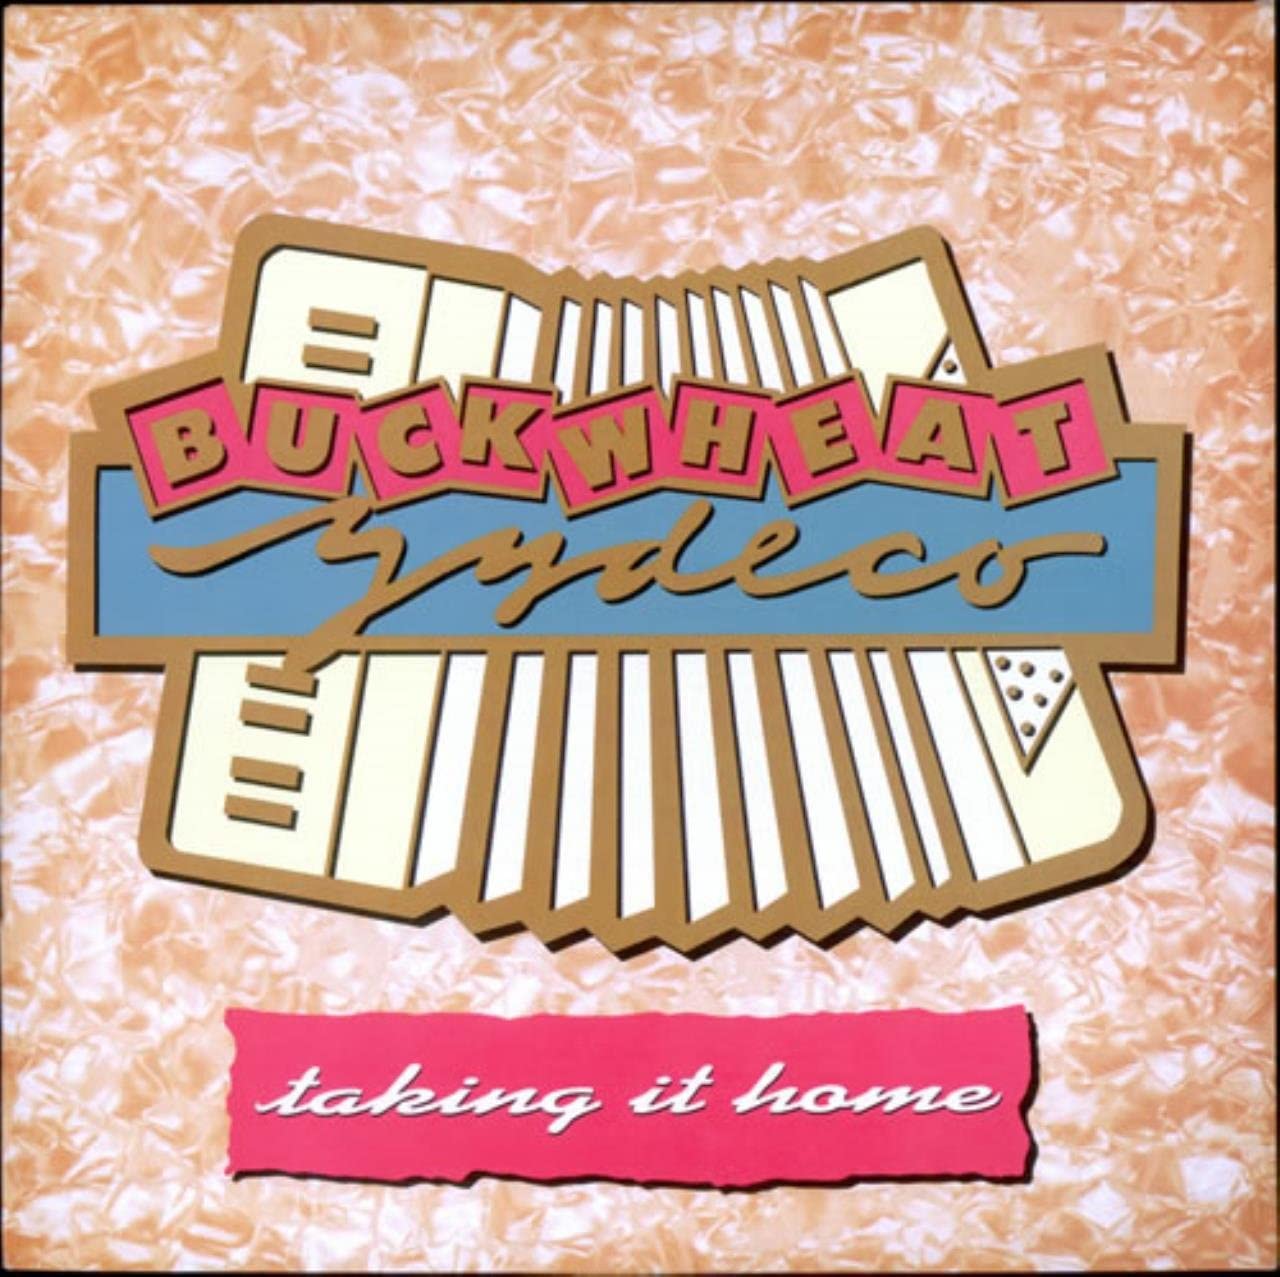 Buckweat Zydeco - Taking It Home cover album